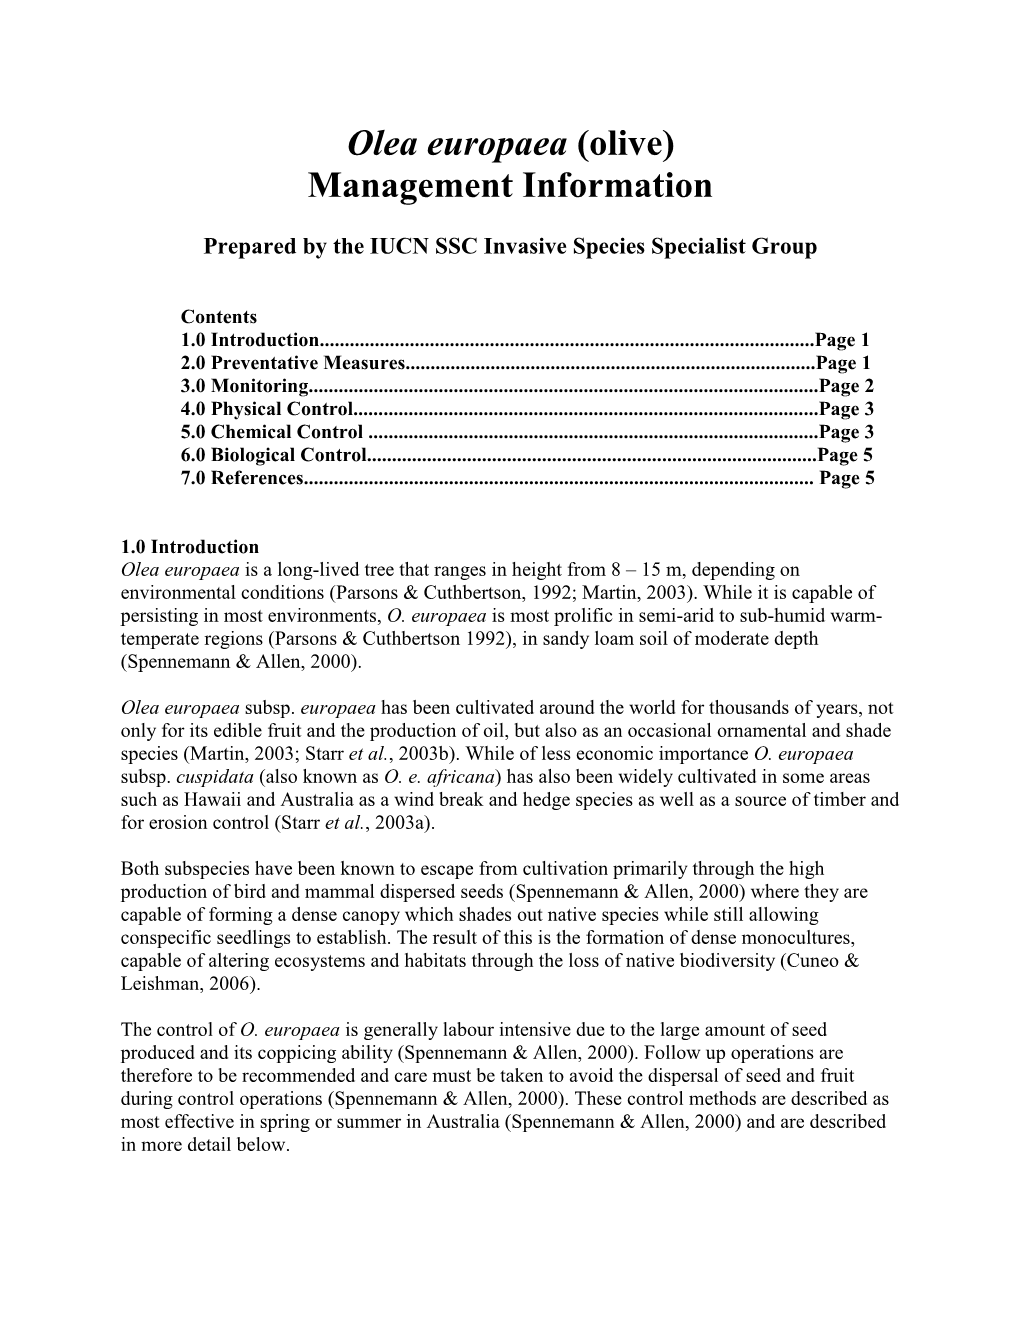 Olea Europaea (Olive) Management Information